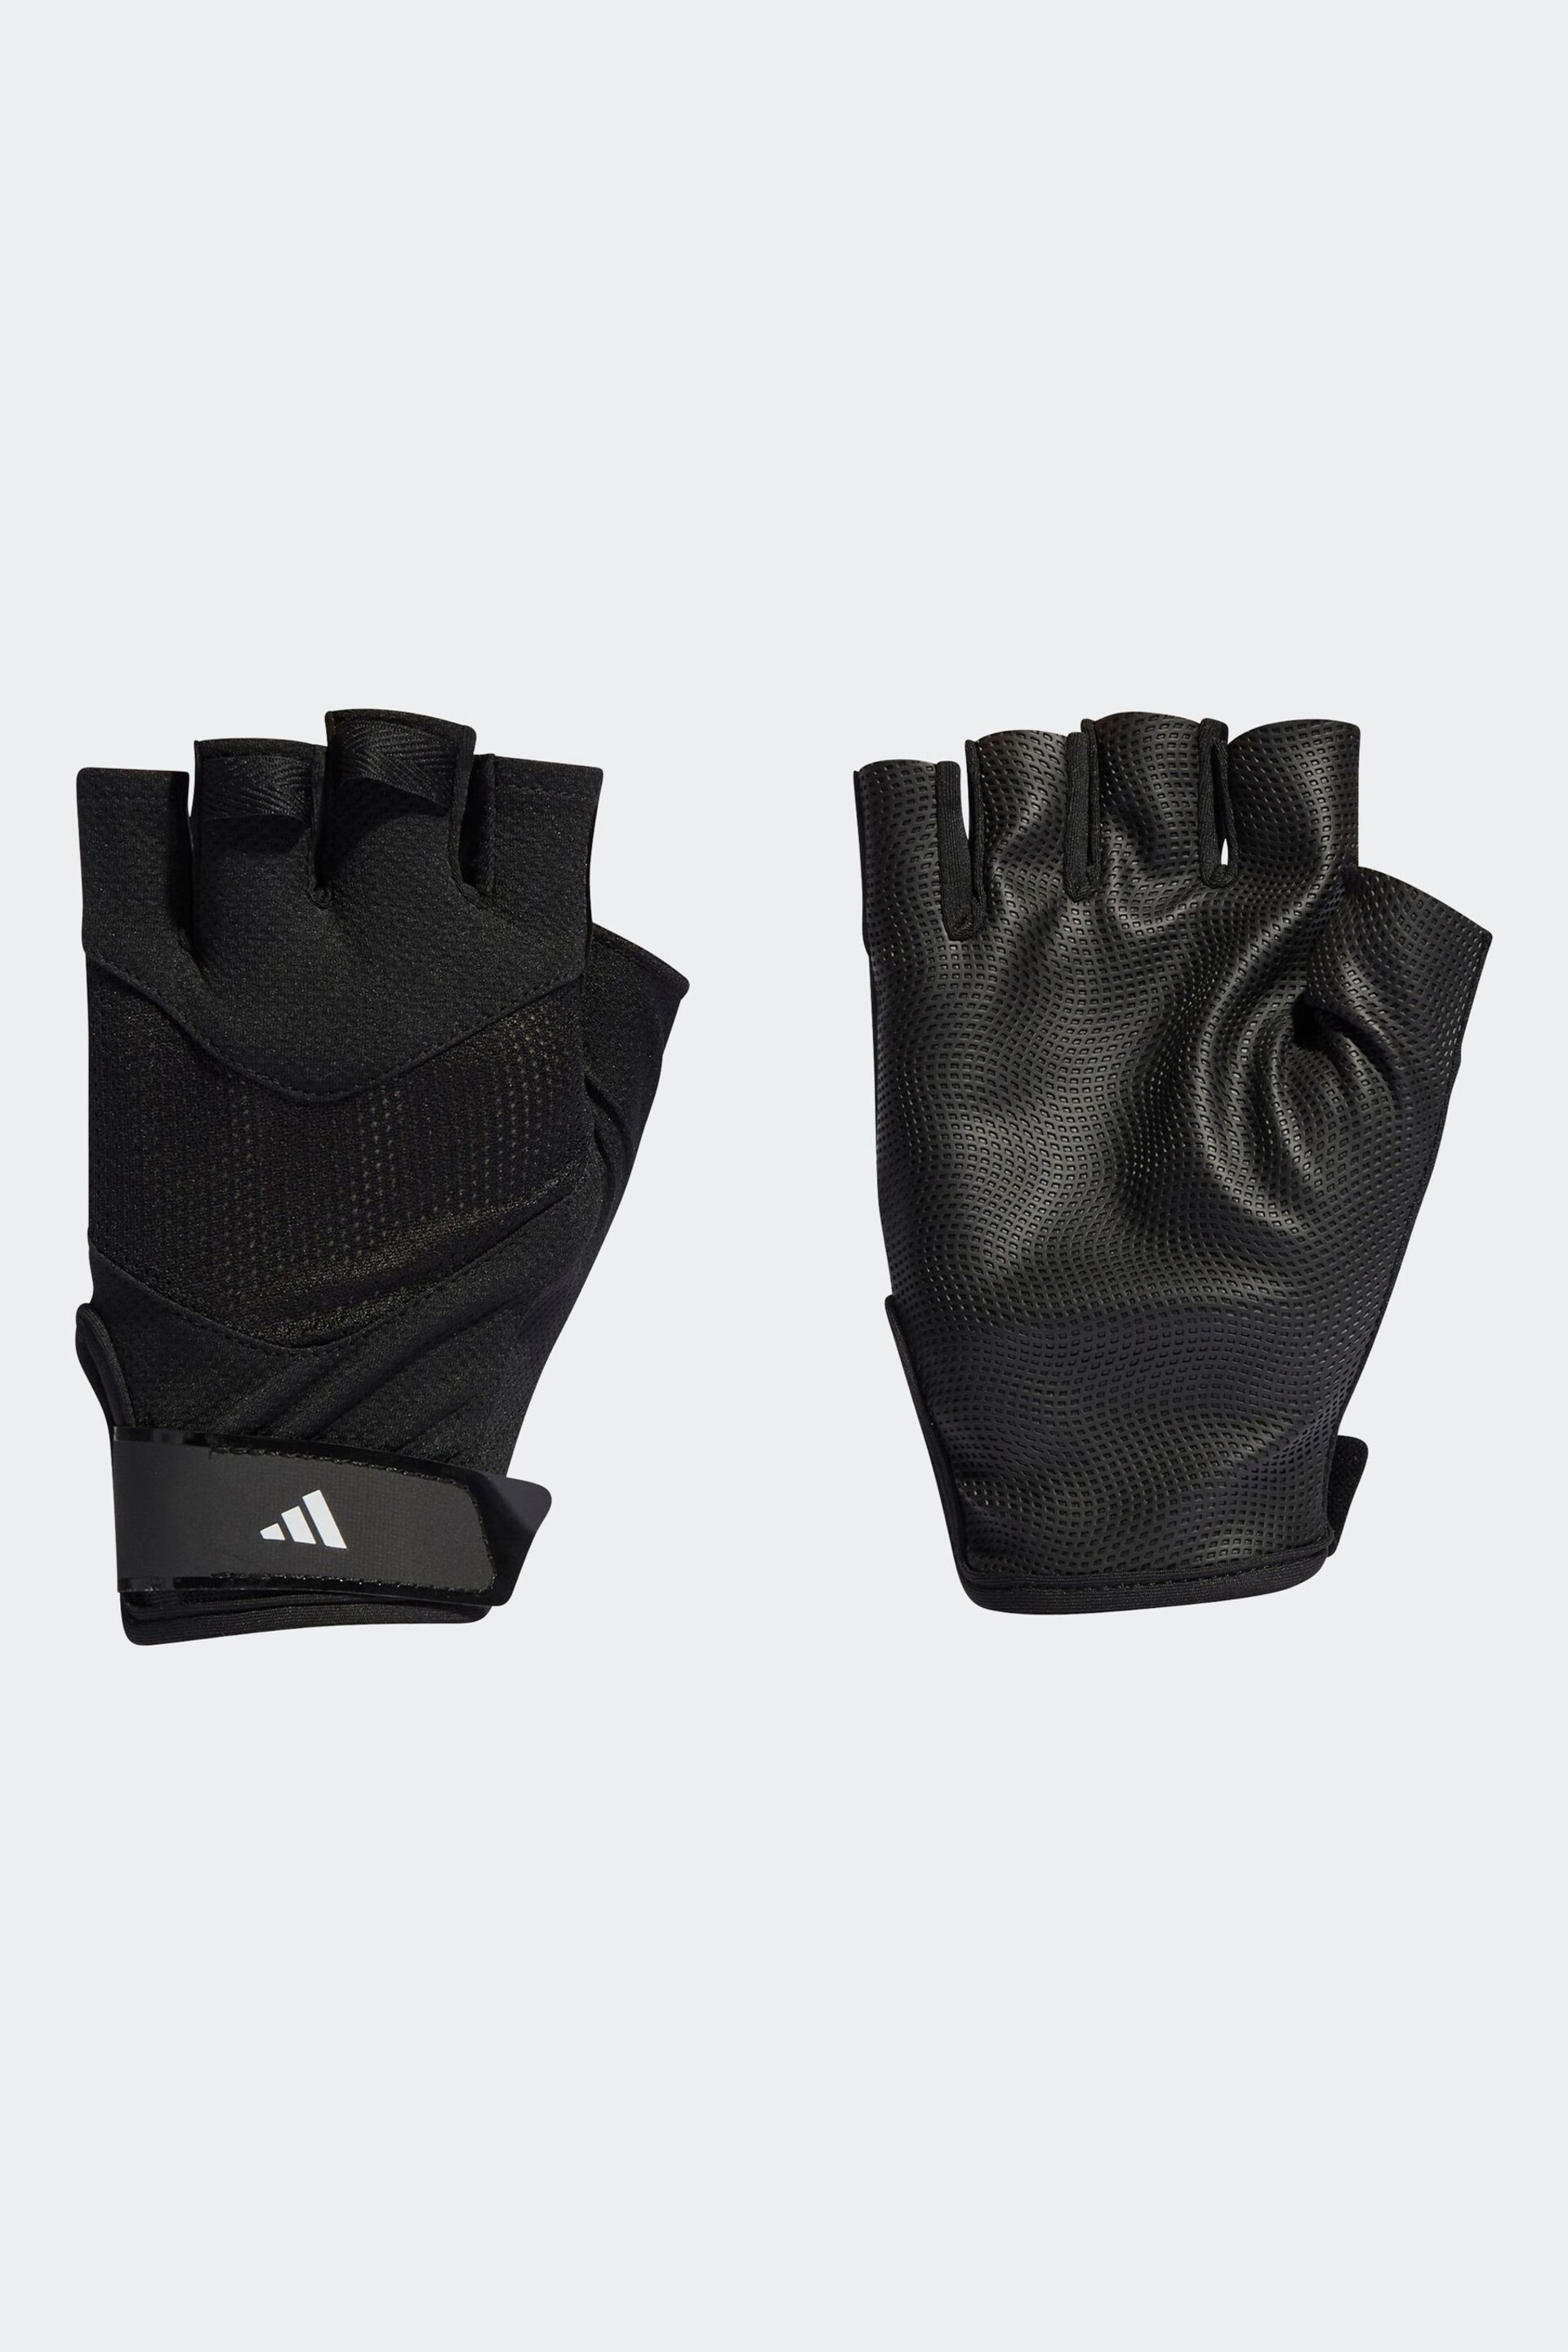 adidas Black Adult Training Gloves - Image 1 of 3